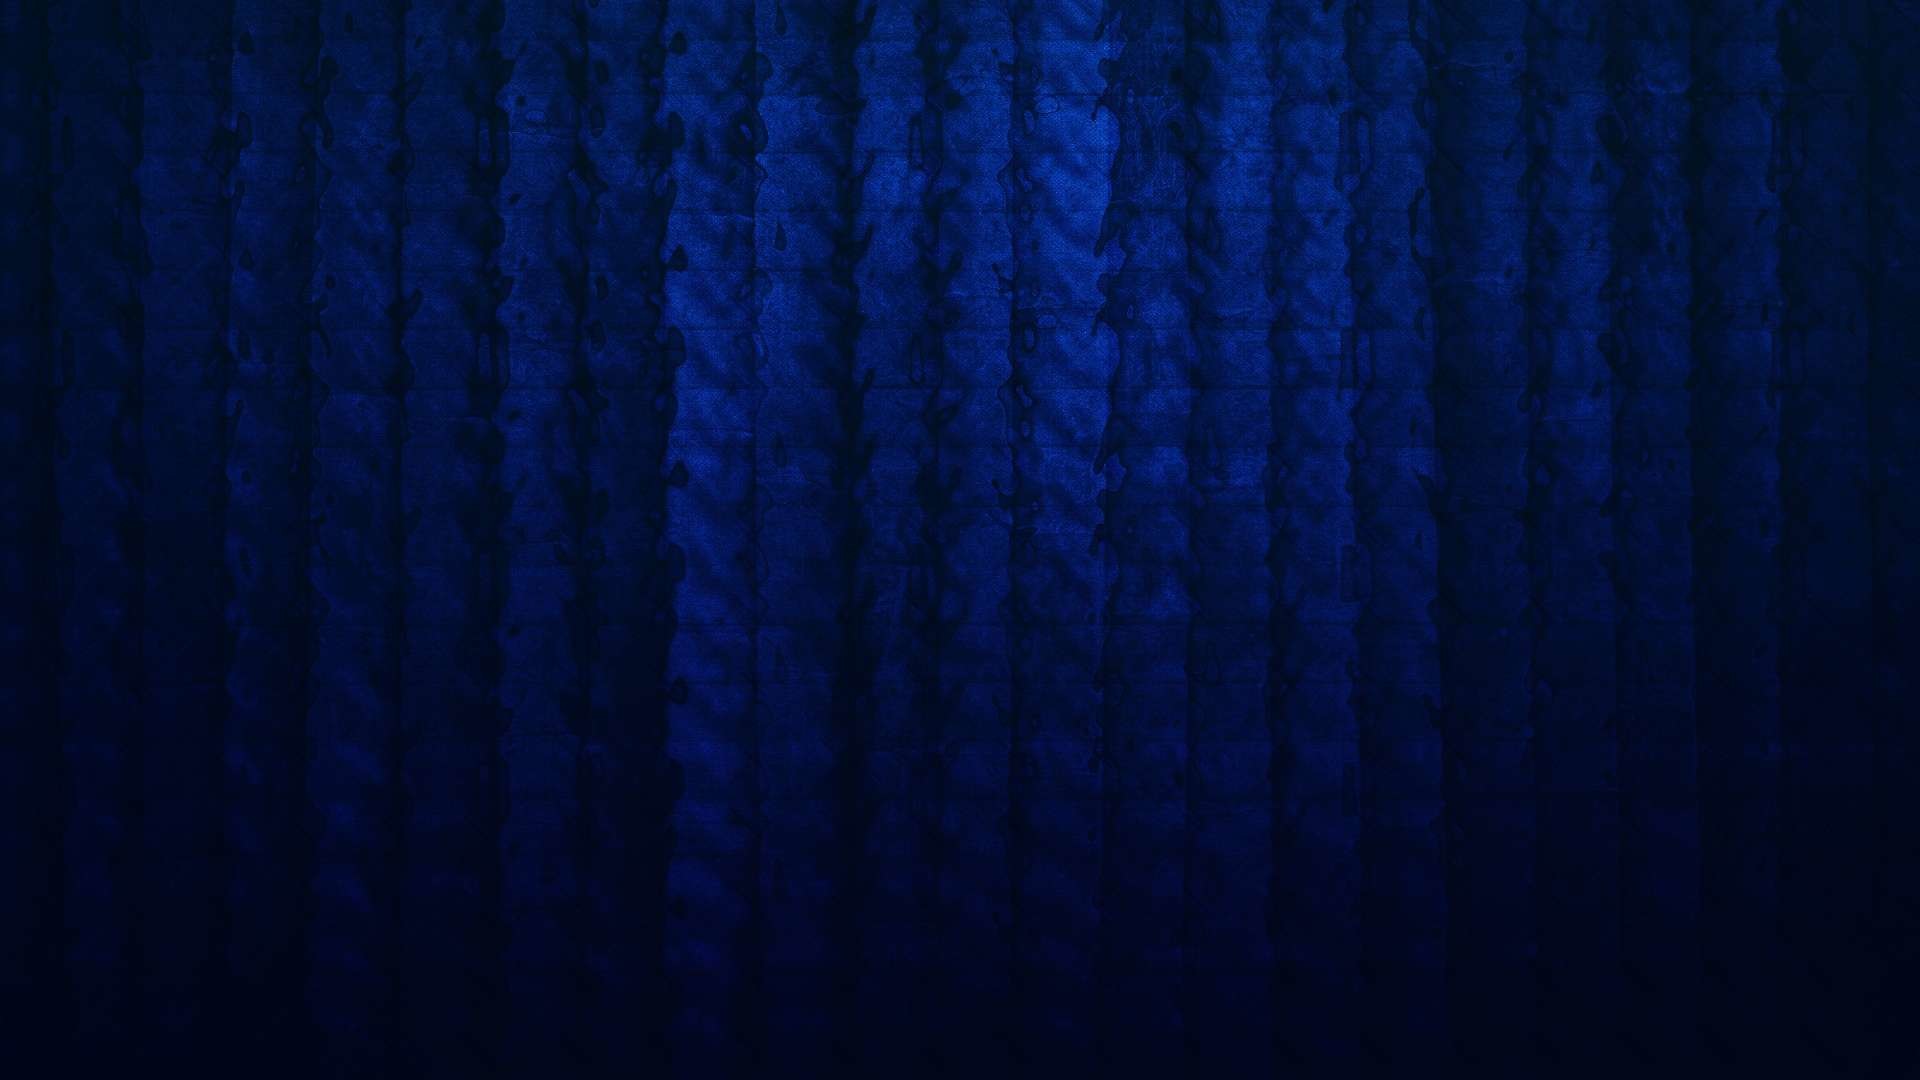 1920x1080 Wallpaper: Texture Blue Stripes Dark Hd Wallpaper 1080p. Upload at .